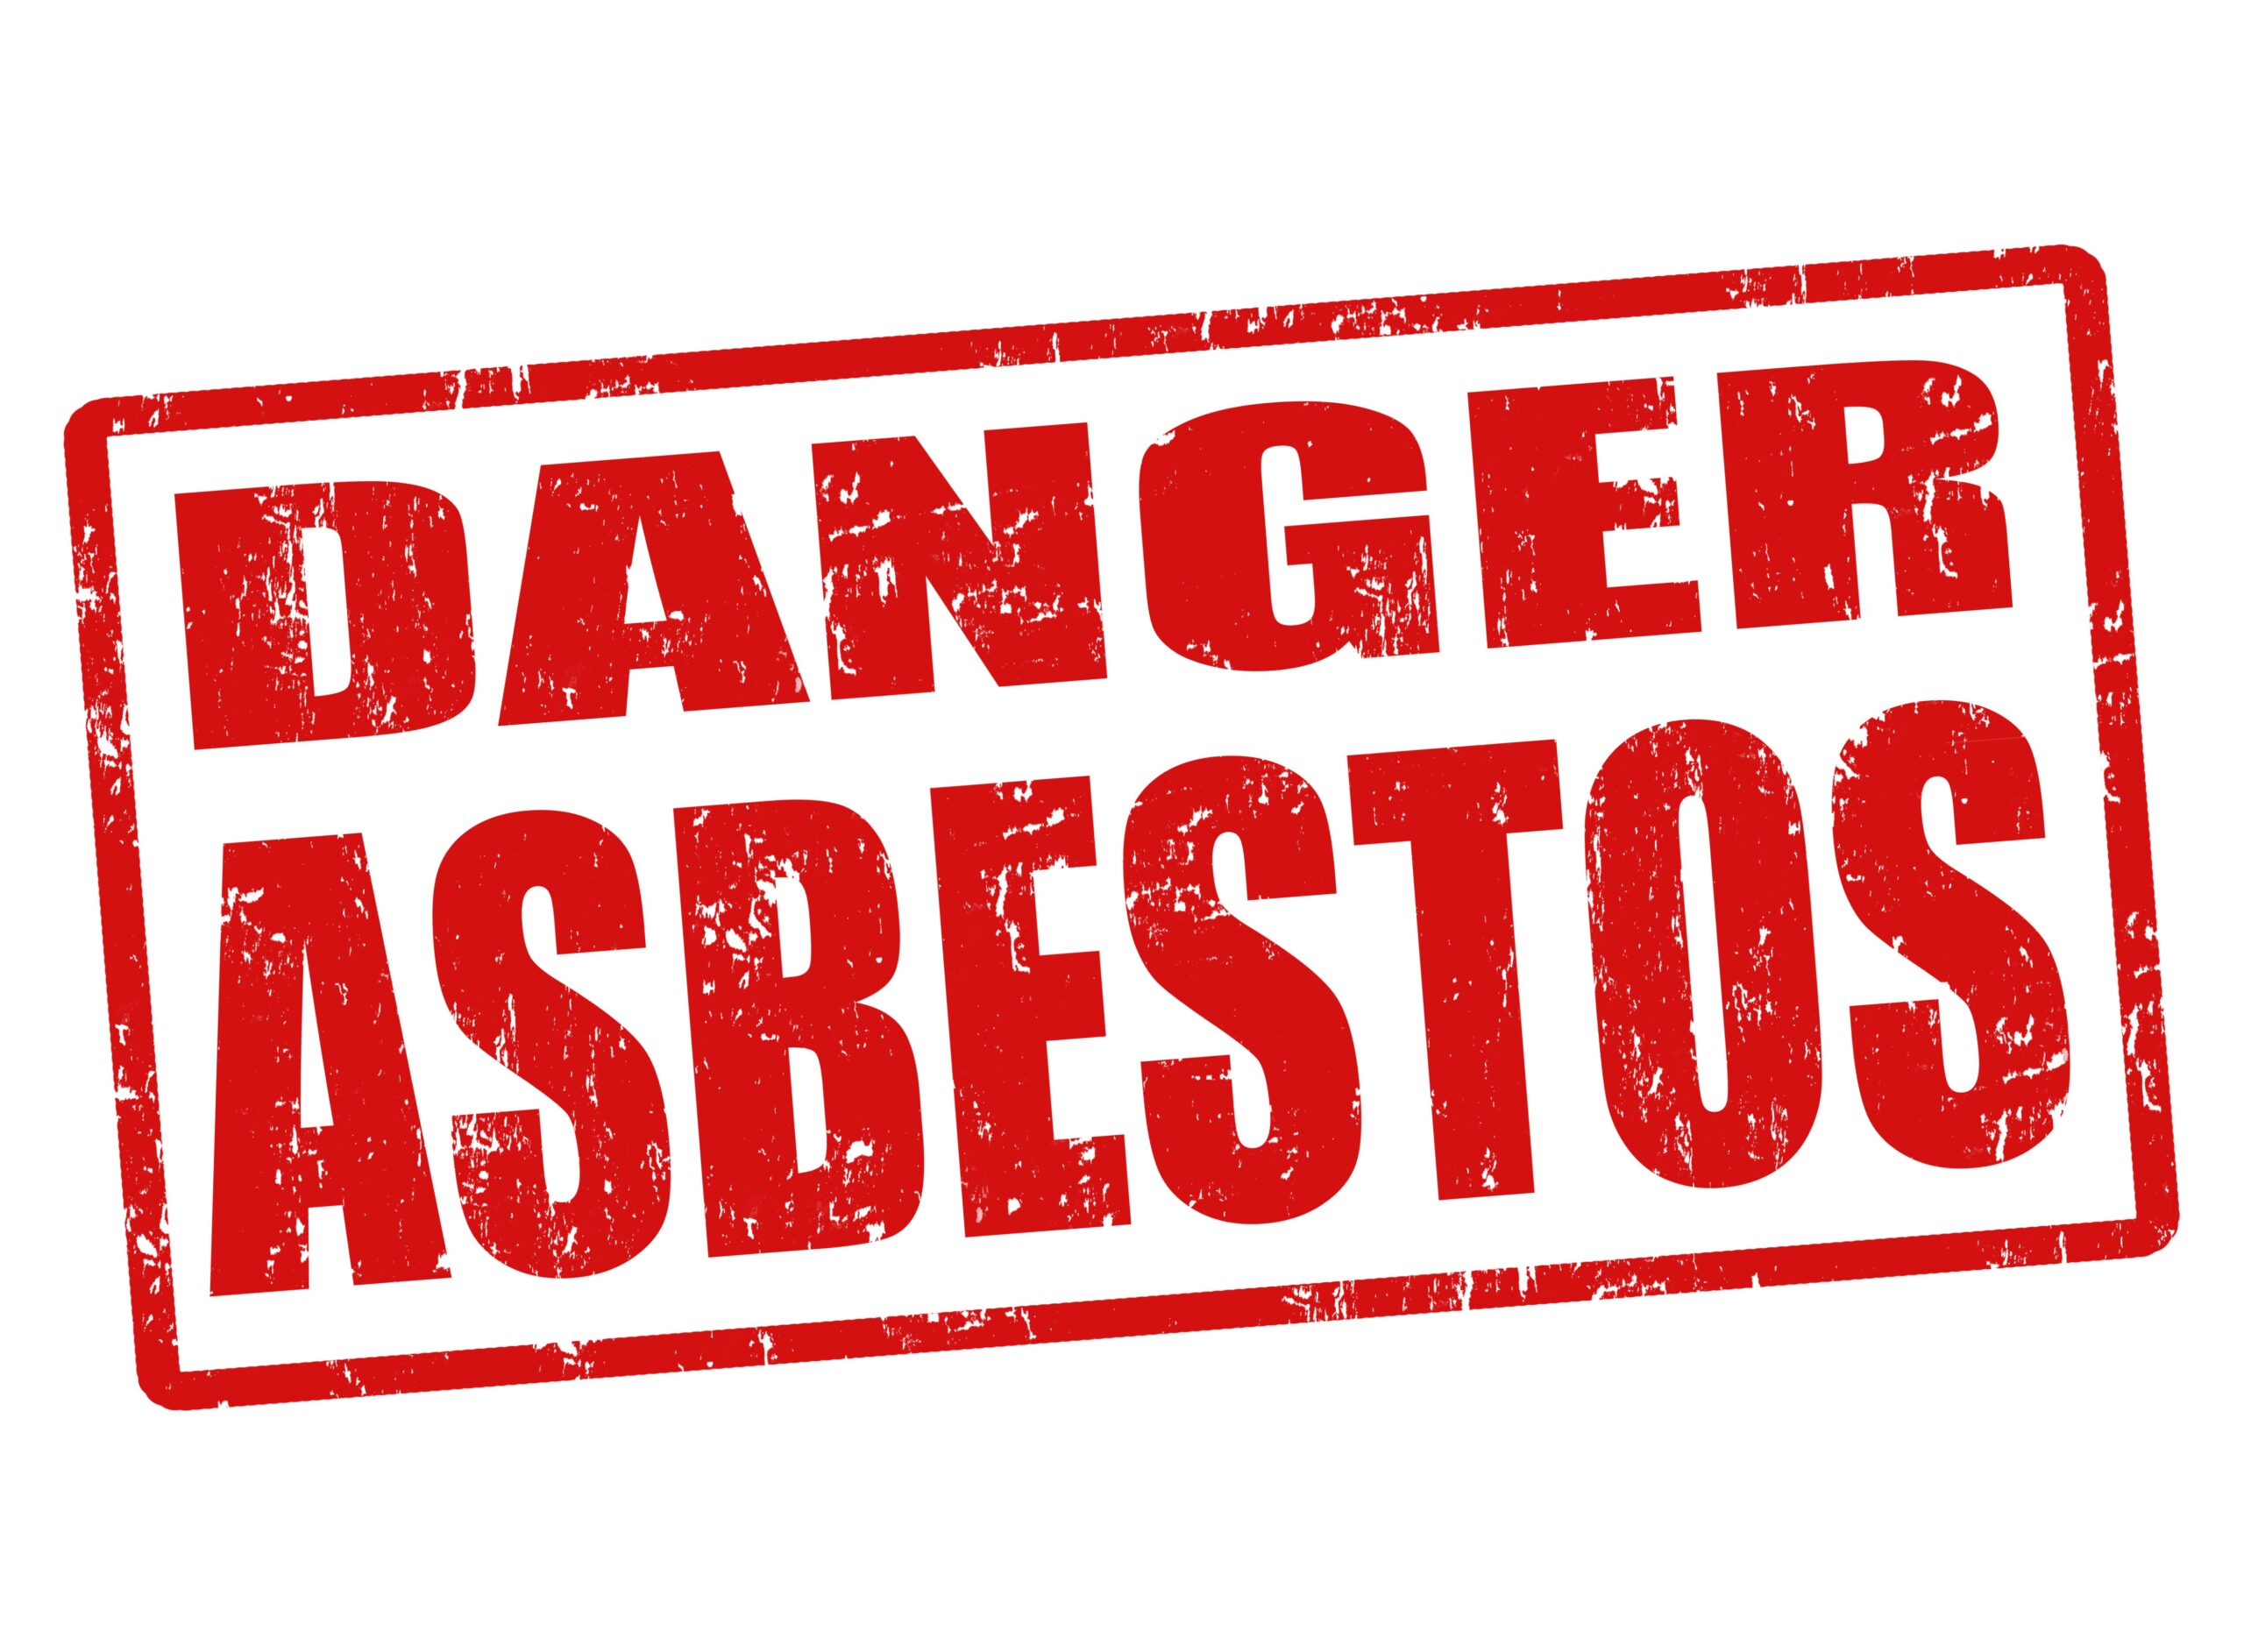 asbestos violations